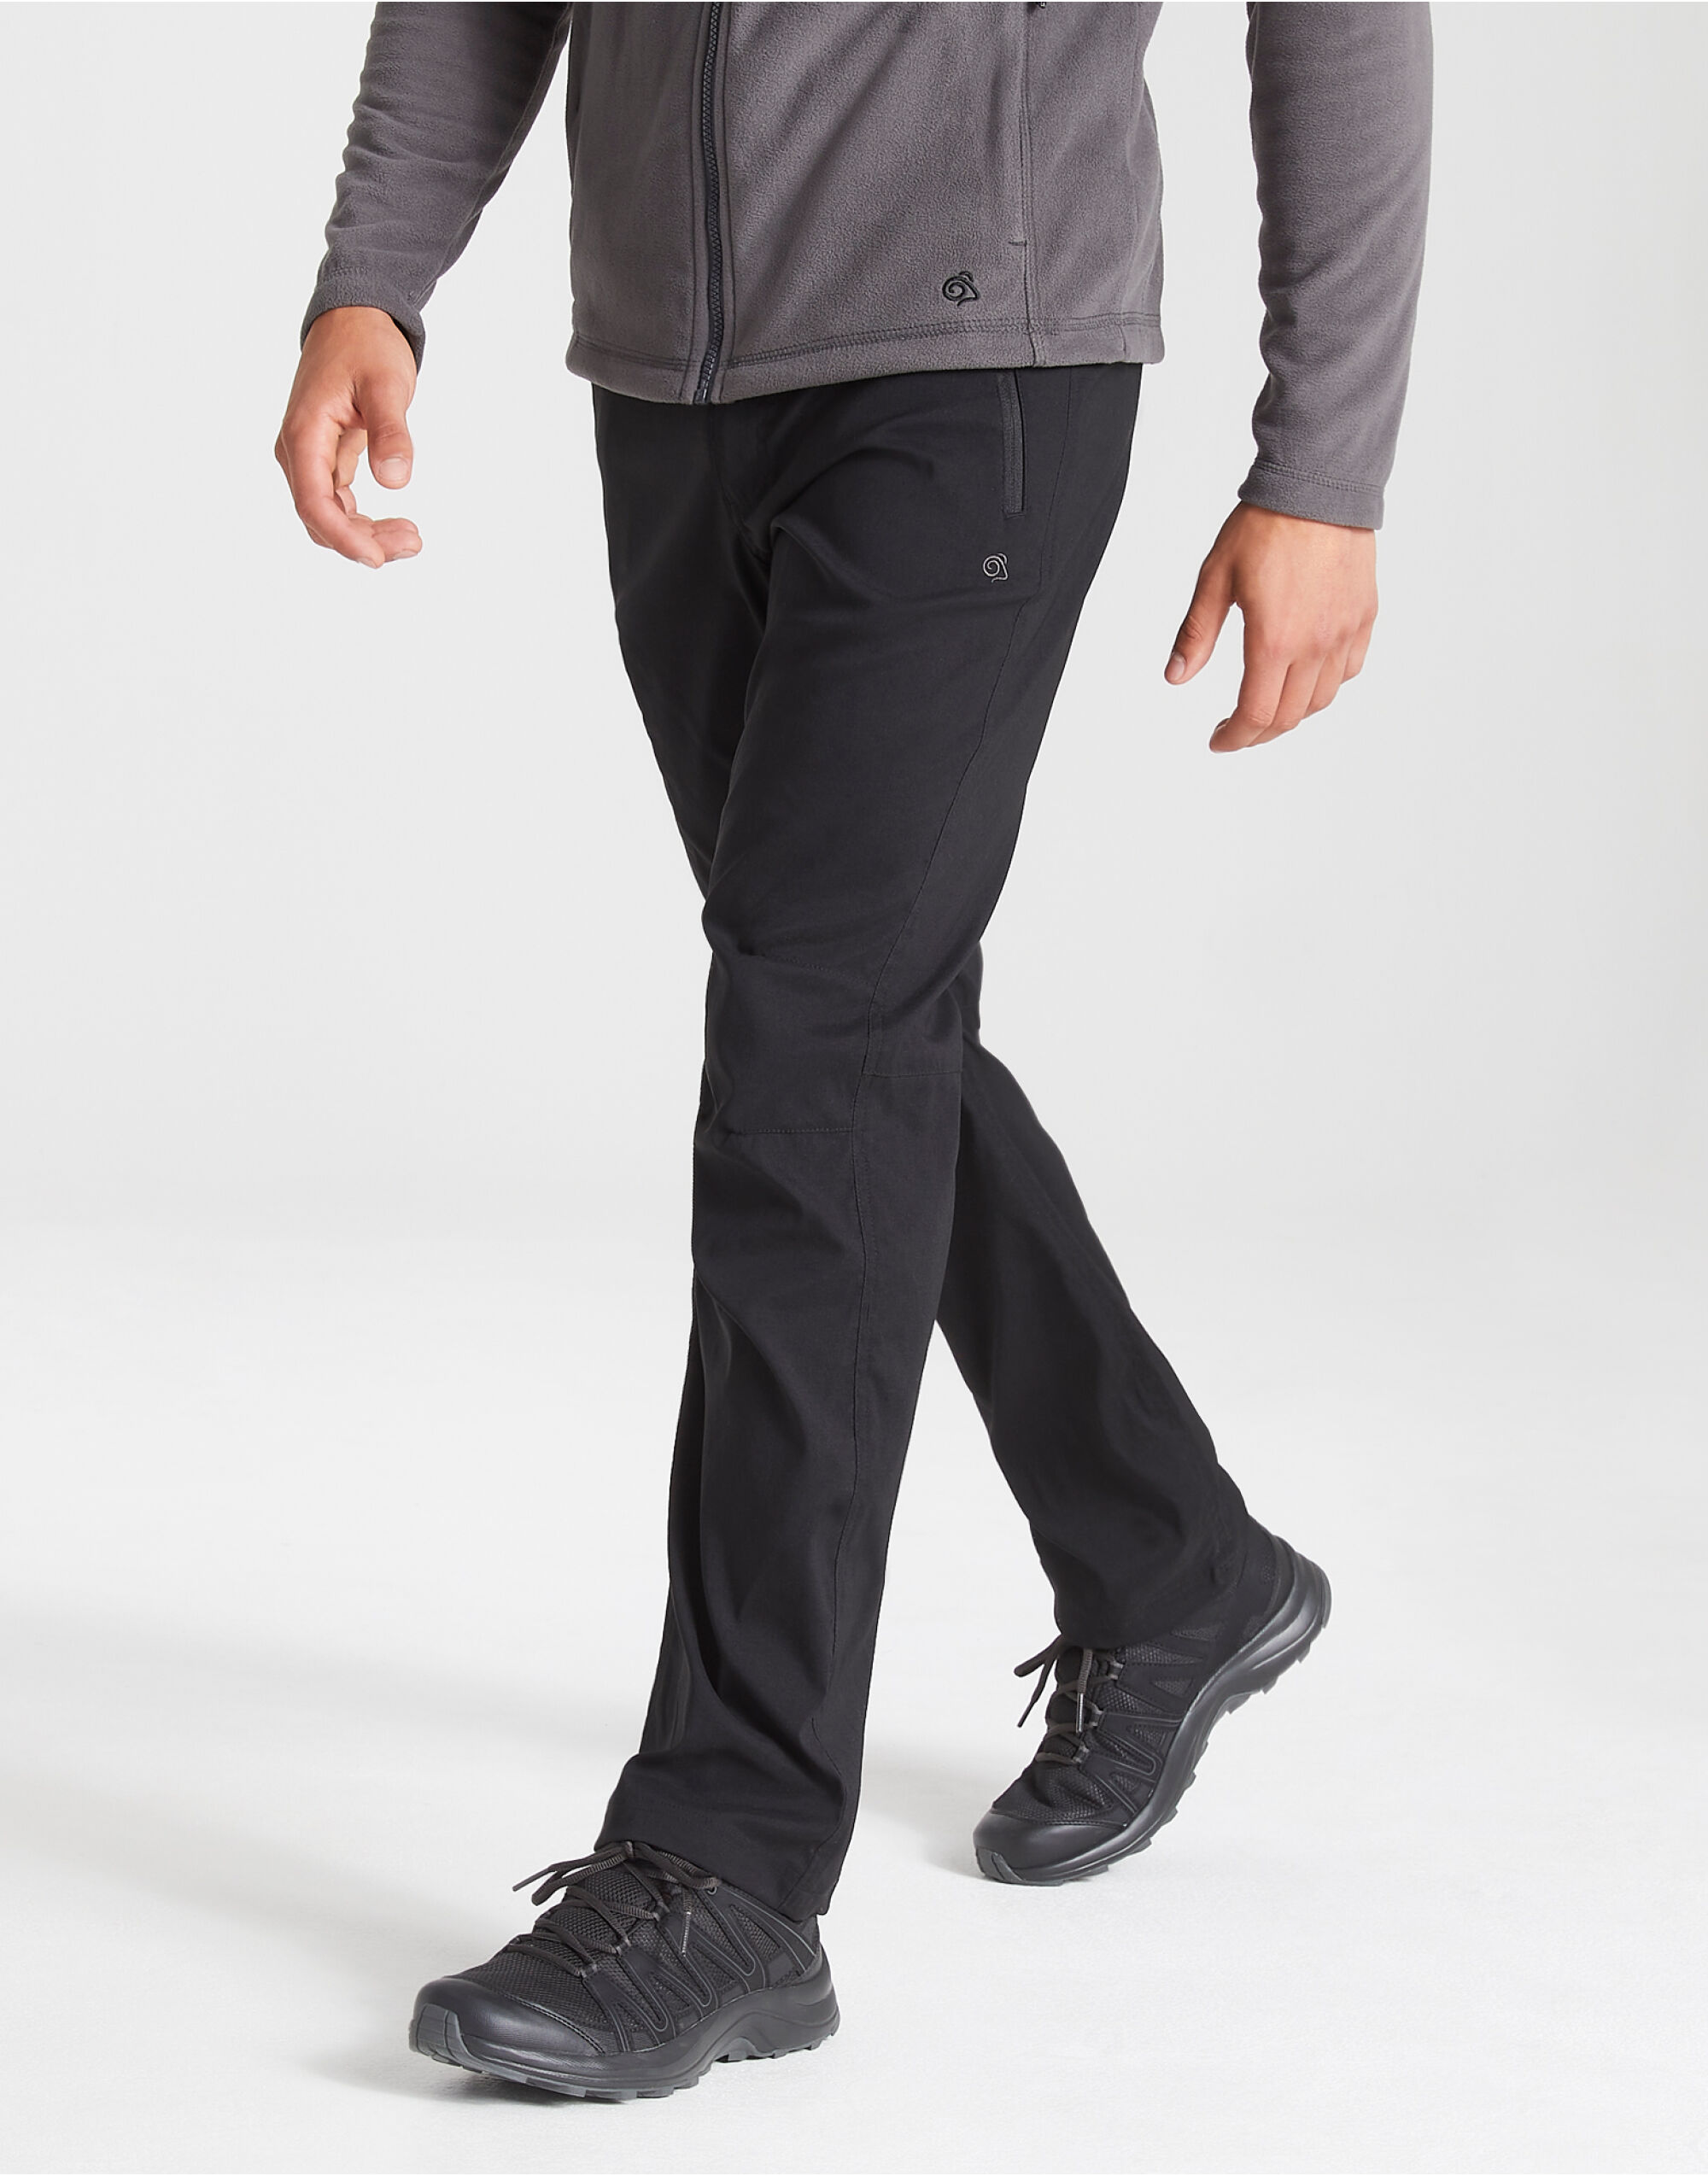 Men's Expert Kiwi Pro II Stretch Trousers (Short)